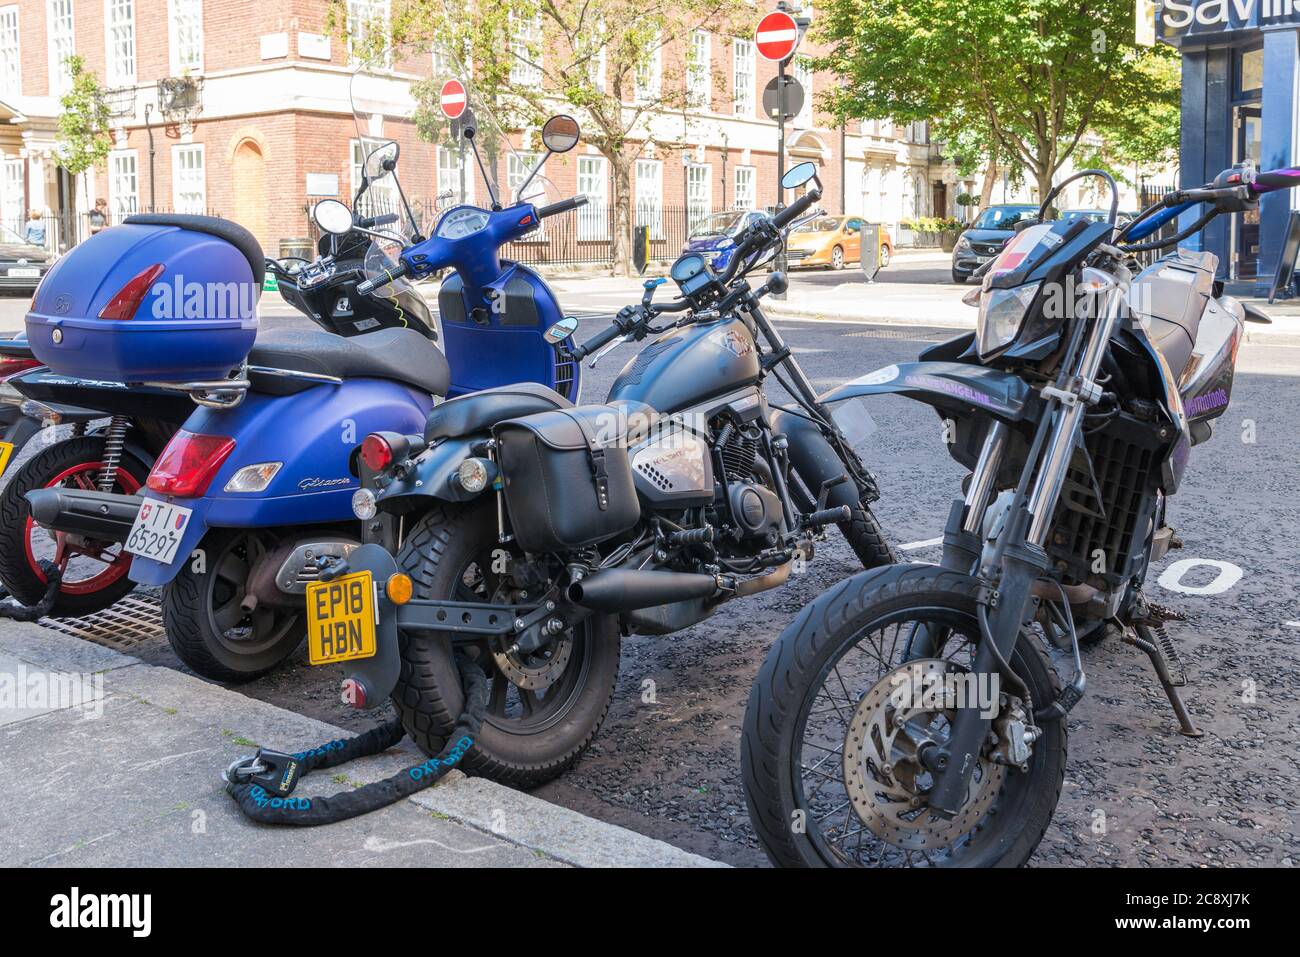 Motorbikes parked kerbside in a street parking bay, London, England, UK Stock Photo